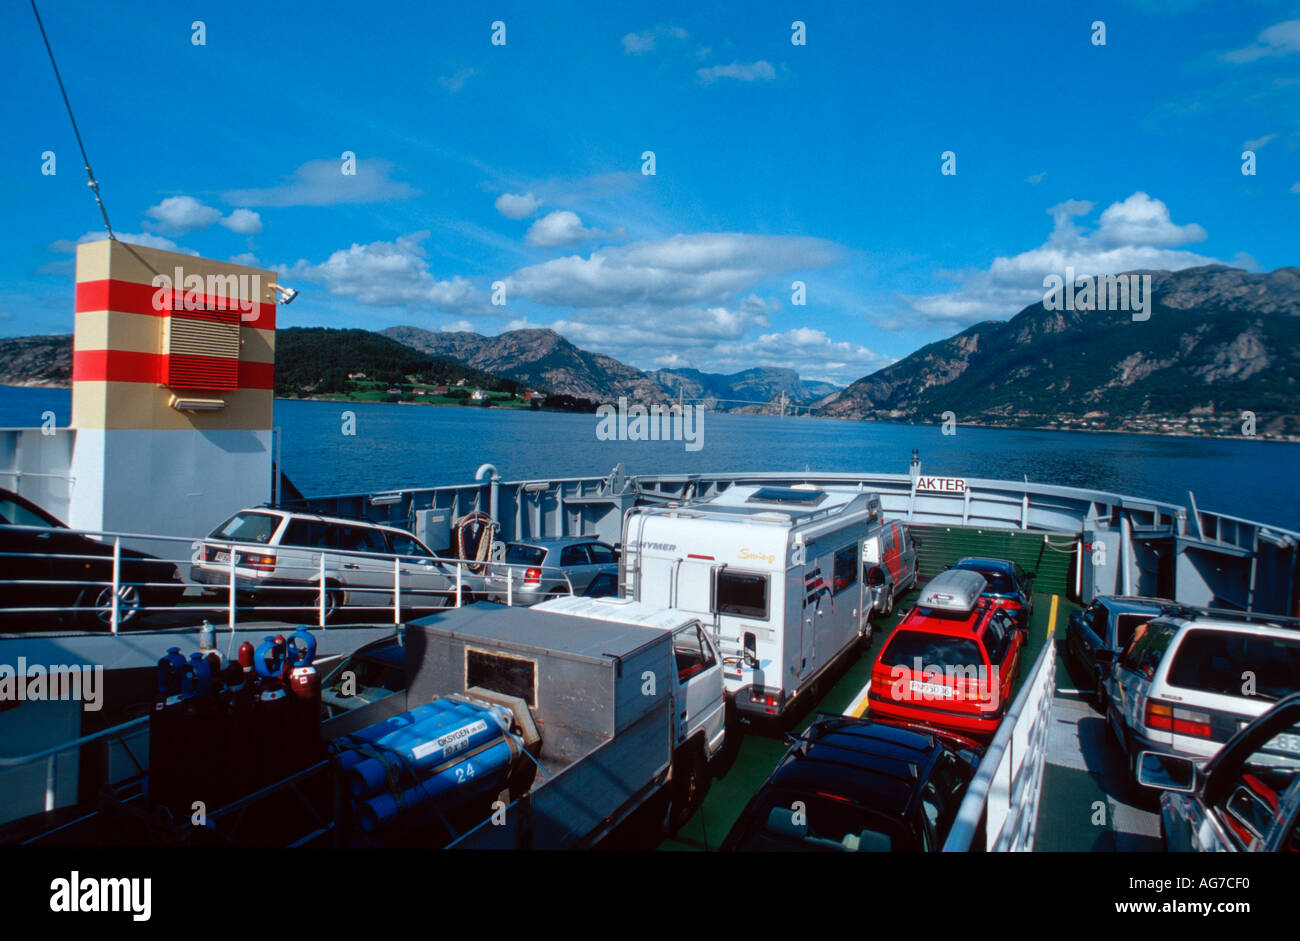 Cars on ferry Norway Autos auf Faehre Norwegen Europa europe Querformat horizontal Boot Schiff boat ship PKW car Stock Photo